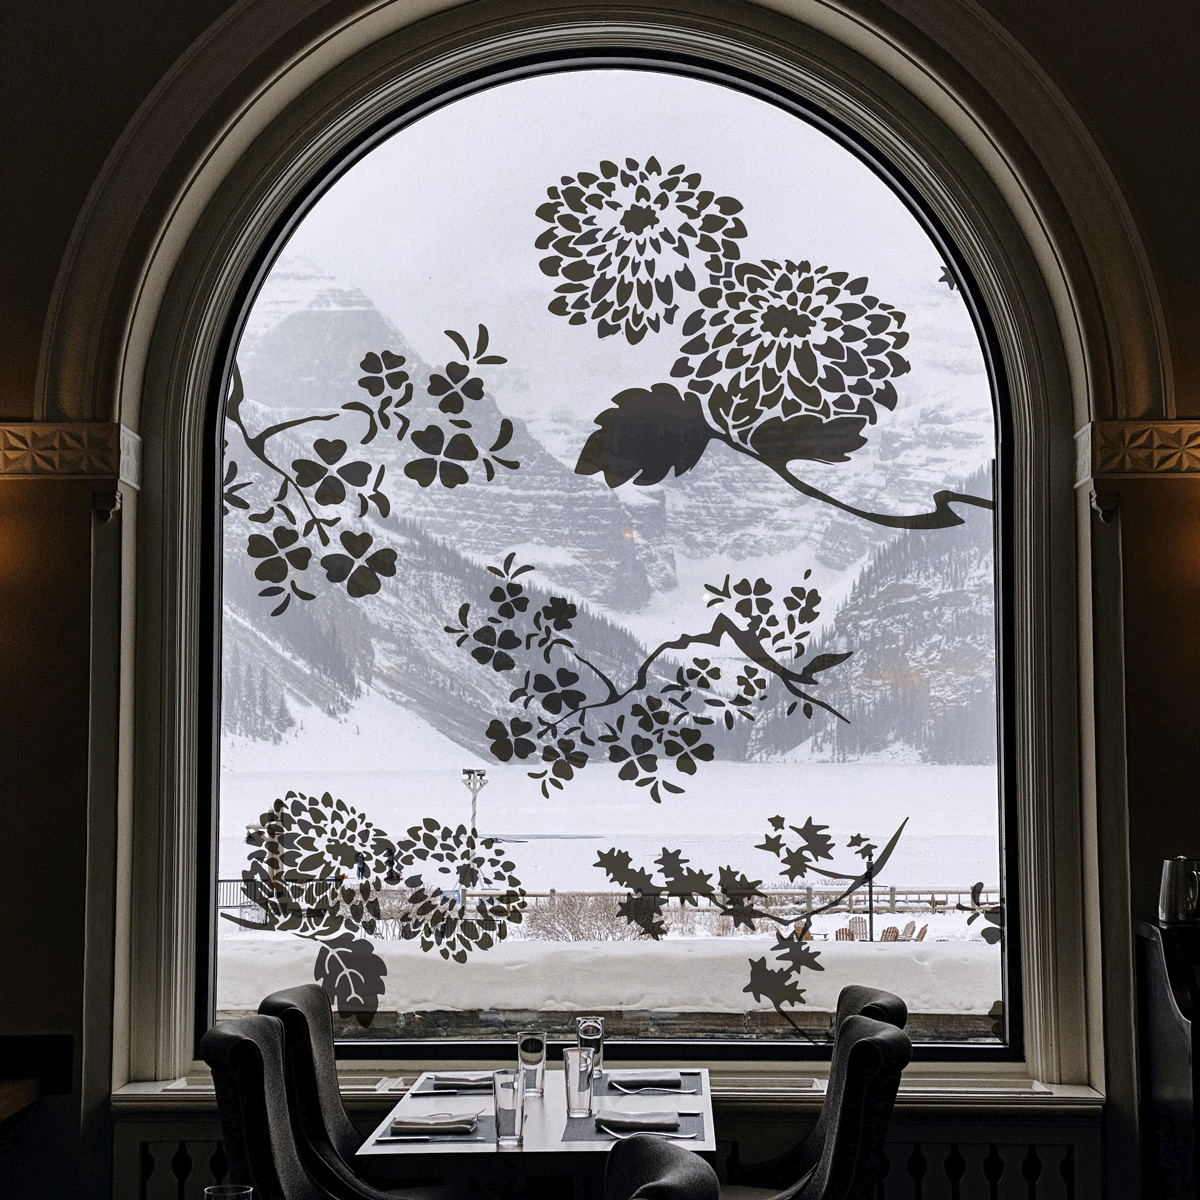 Escaparatismo - Vinilos decorativos para ventanas Colección Fleurs d'Asie Lili Bambou Design - Acte-Deco